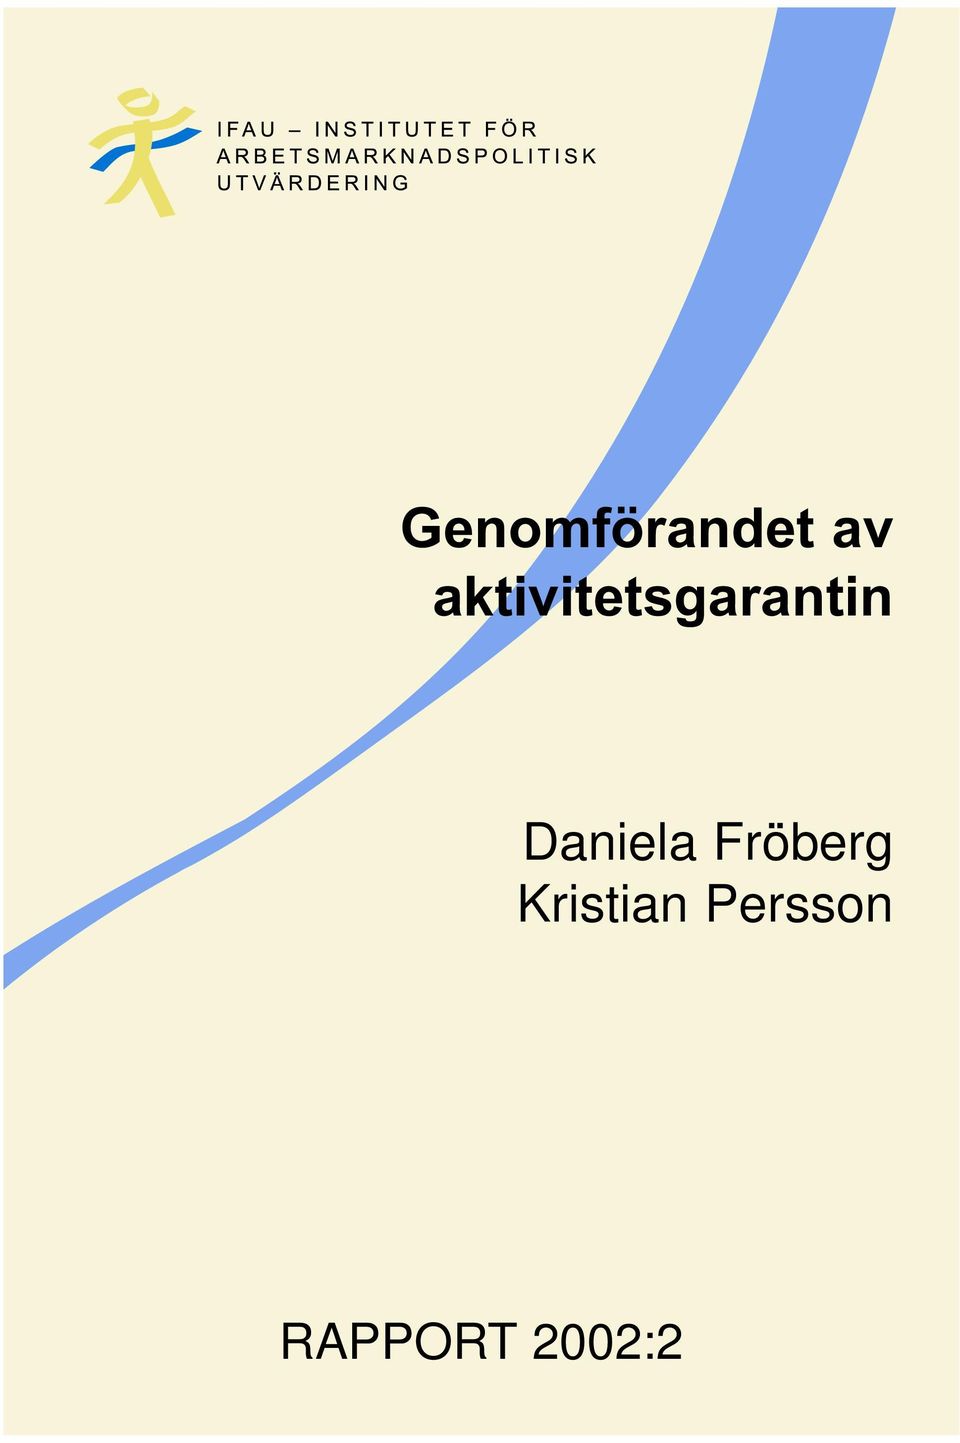 Daniela Fröberg